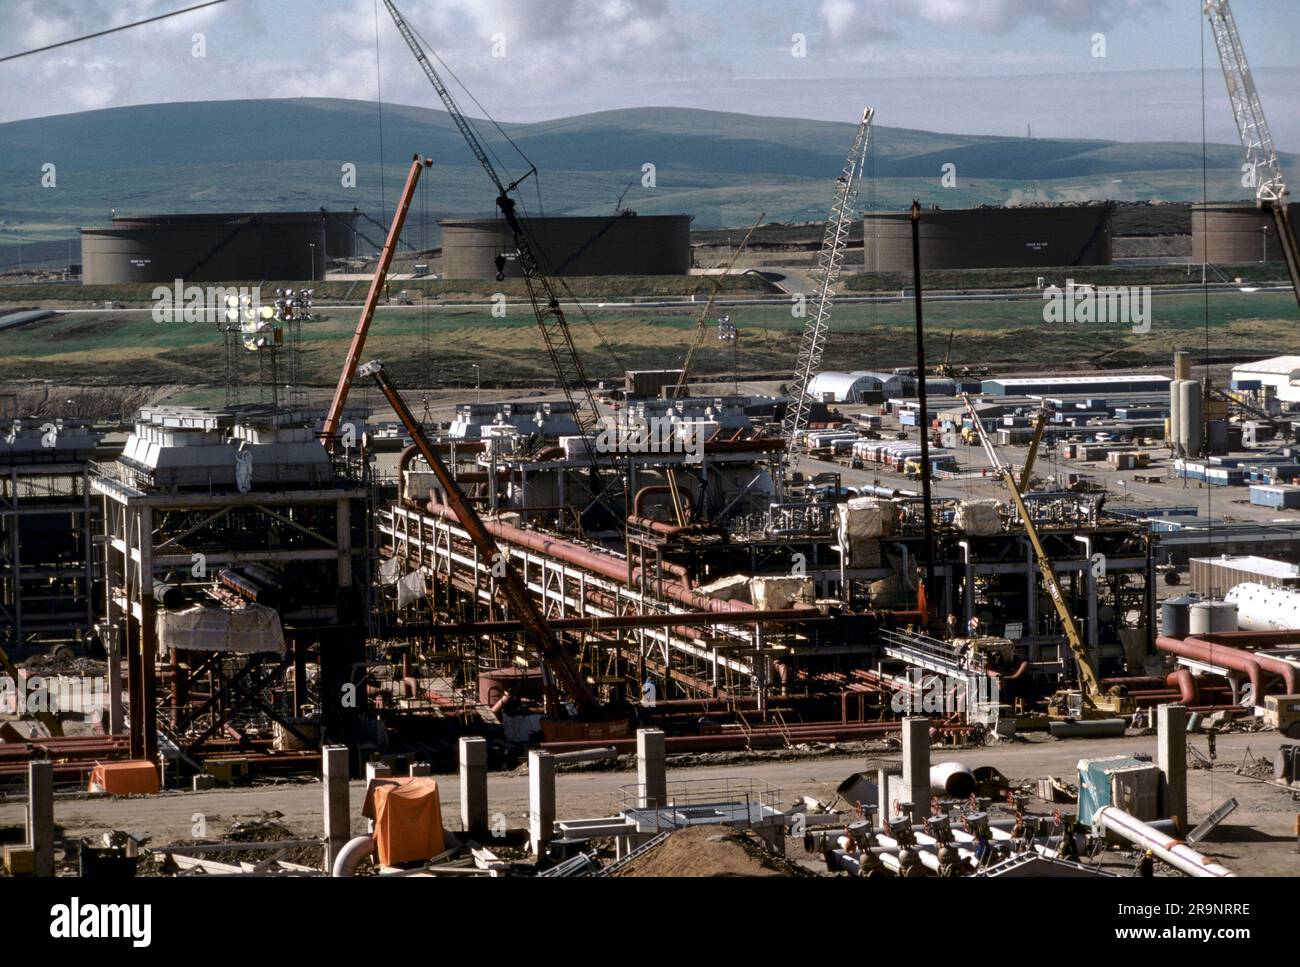 North Sea oil at Sullom Voe Terminal under construction. Oil storage tanks for British Petroleum (BP). Sullom Voe, Shetlands Mainland, Shetland Islands, Scotland, circa 1979. UK 1970S HOMER SYKES Stock Photo